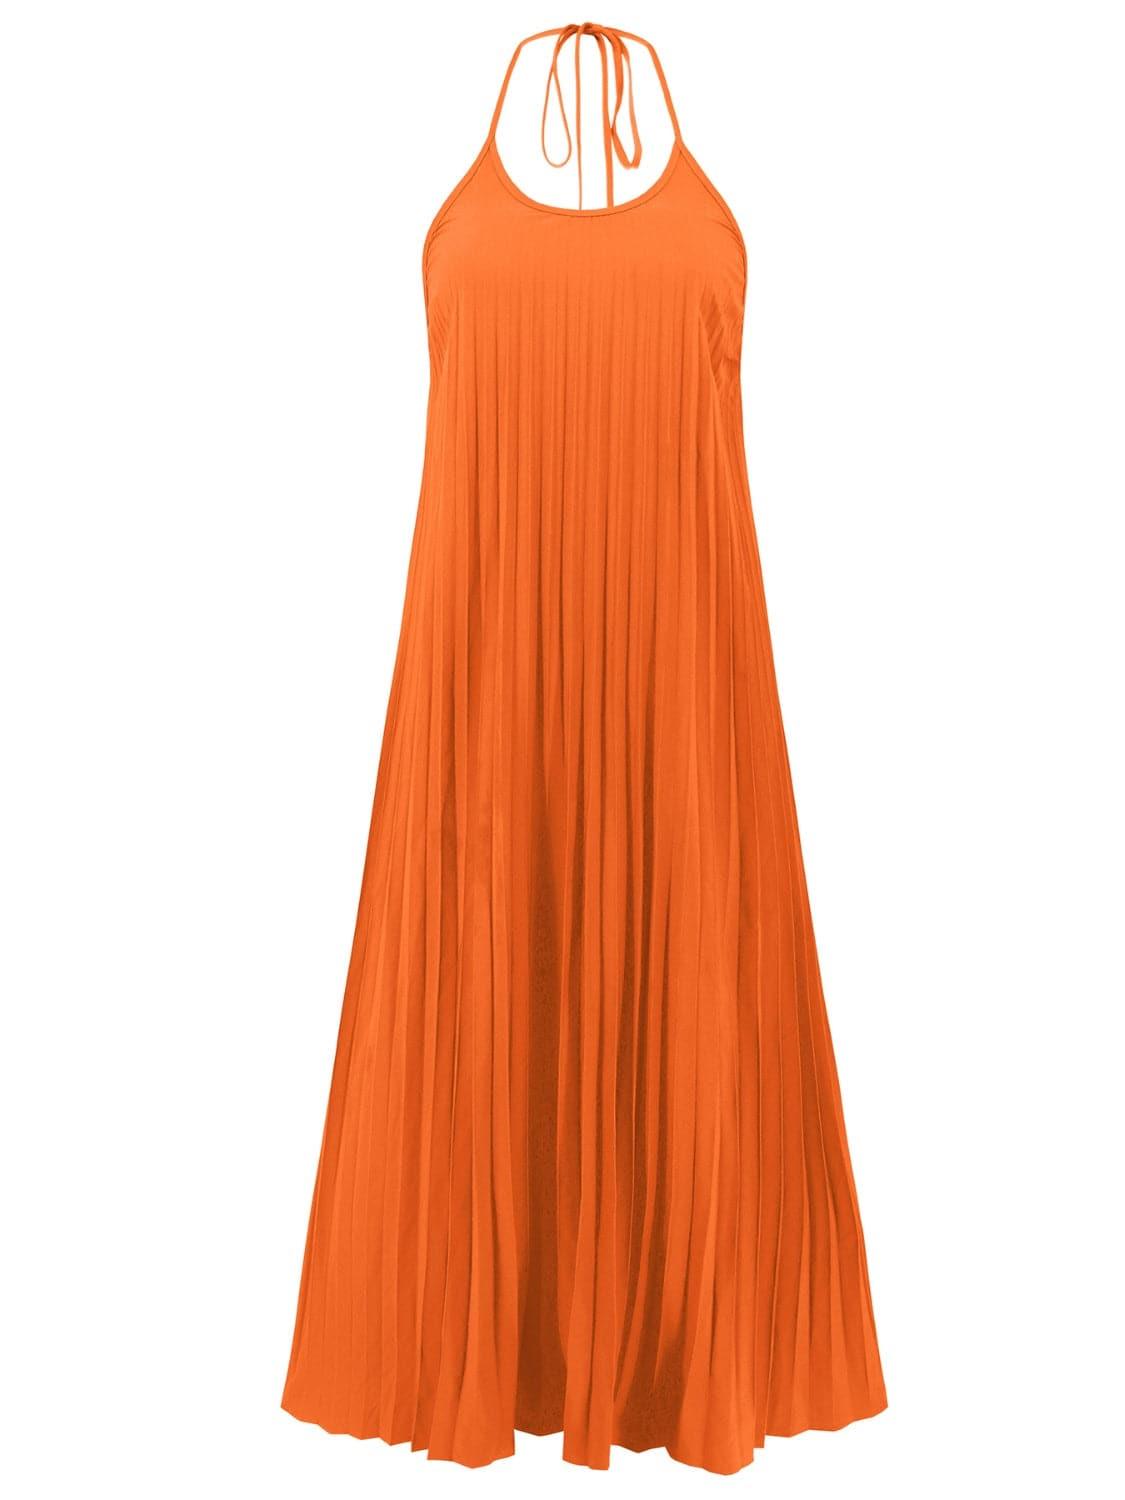 Twirl Pleated Halter Neck Sleeveless Dress - SwagglyLife Home & Fashion